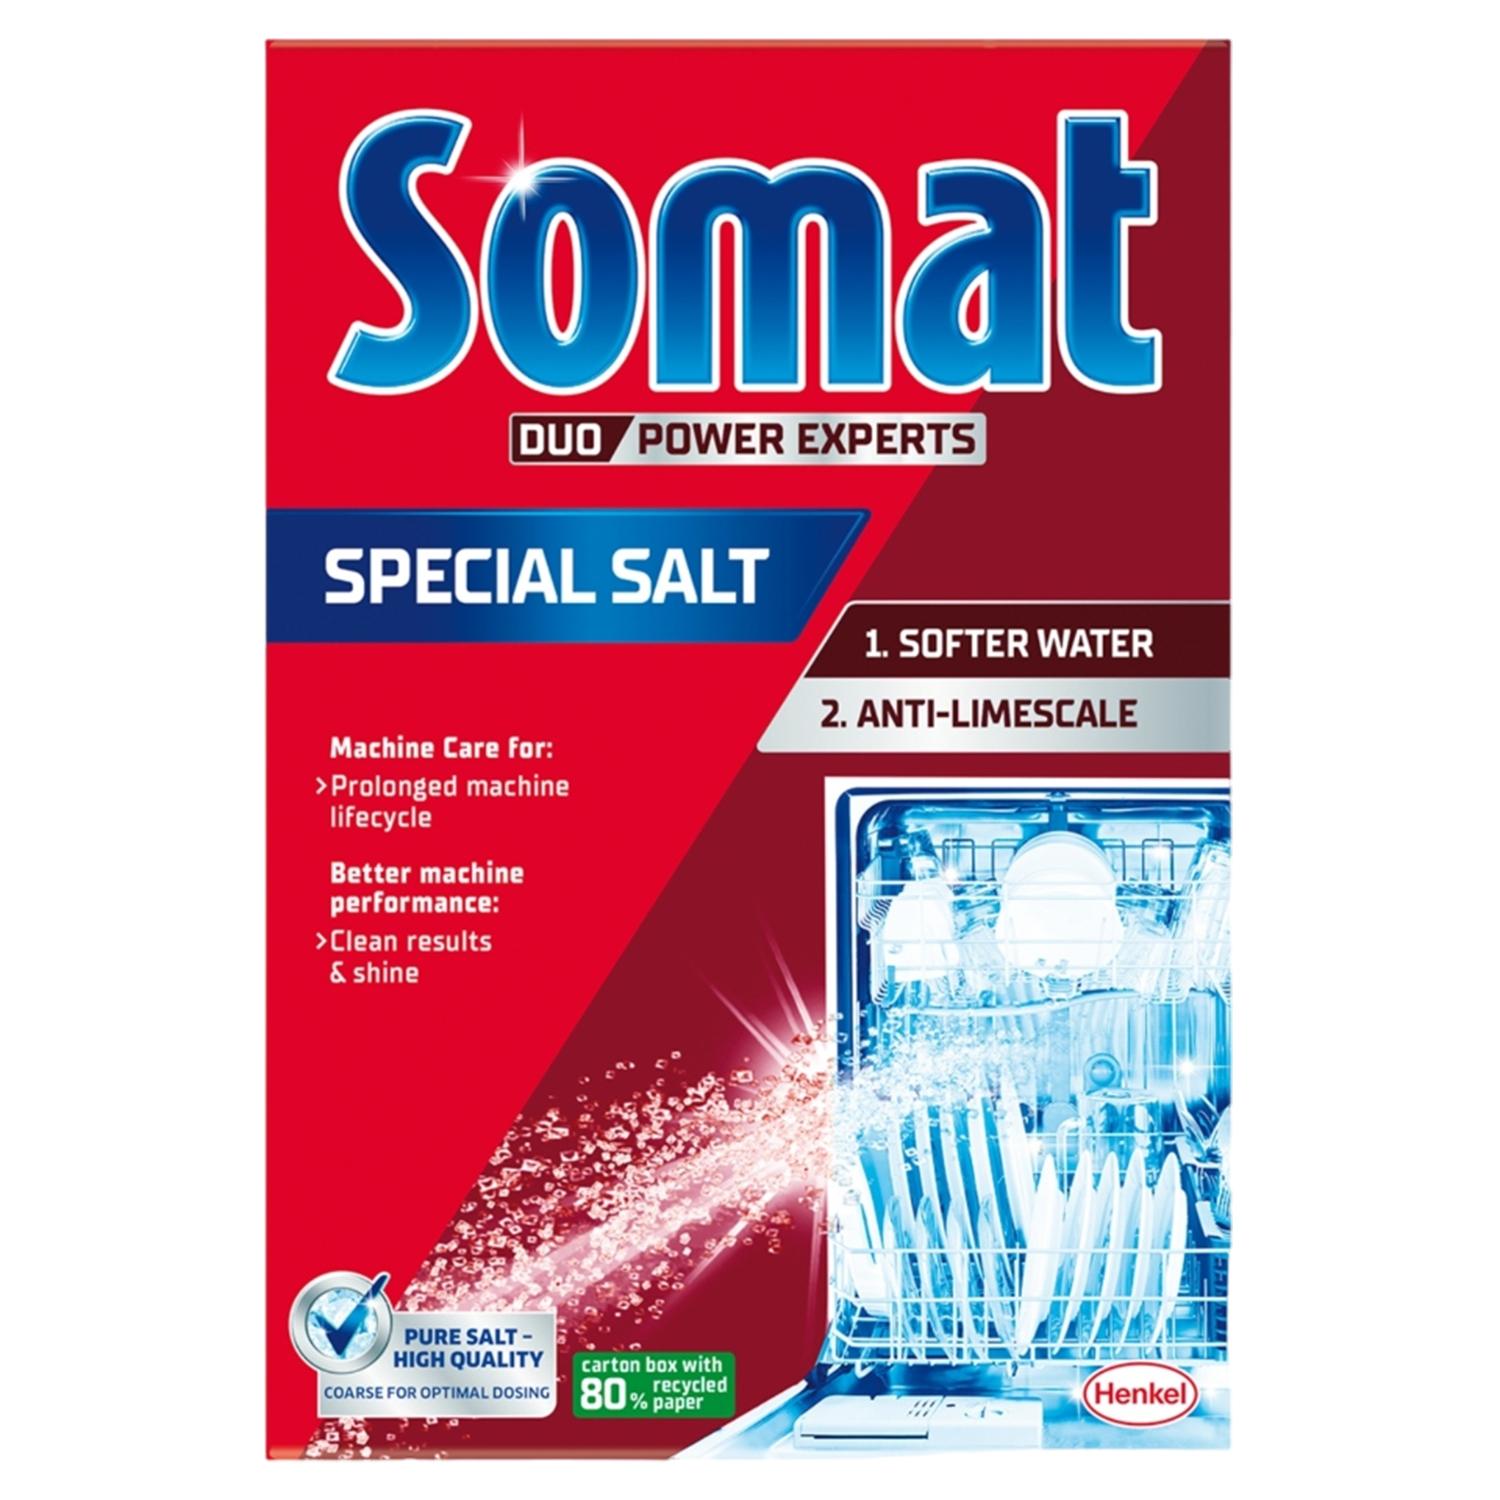 Somat Duo Power Experts Special Salt Tablete za čišćenje mašine za sudove, 1.5 kg